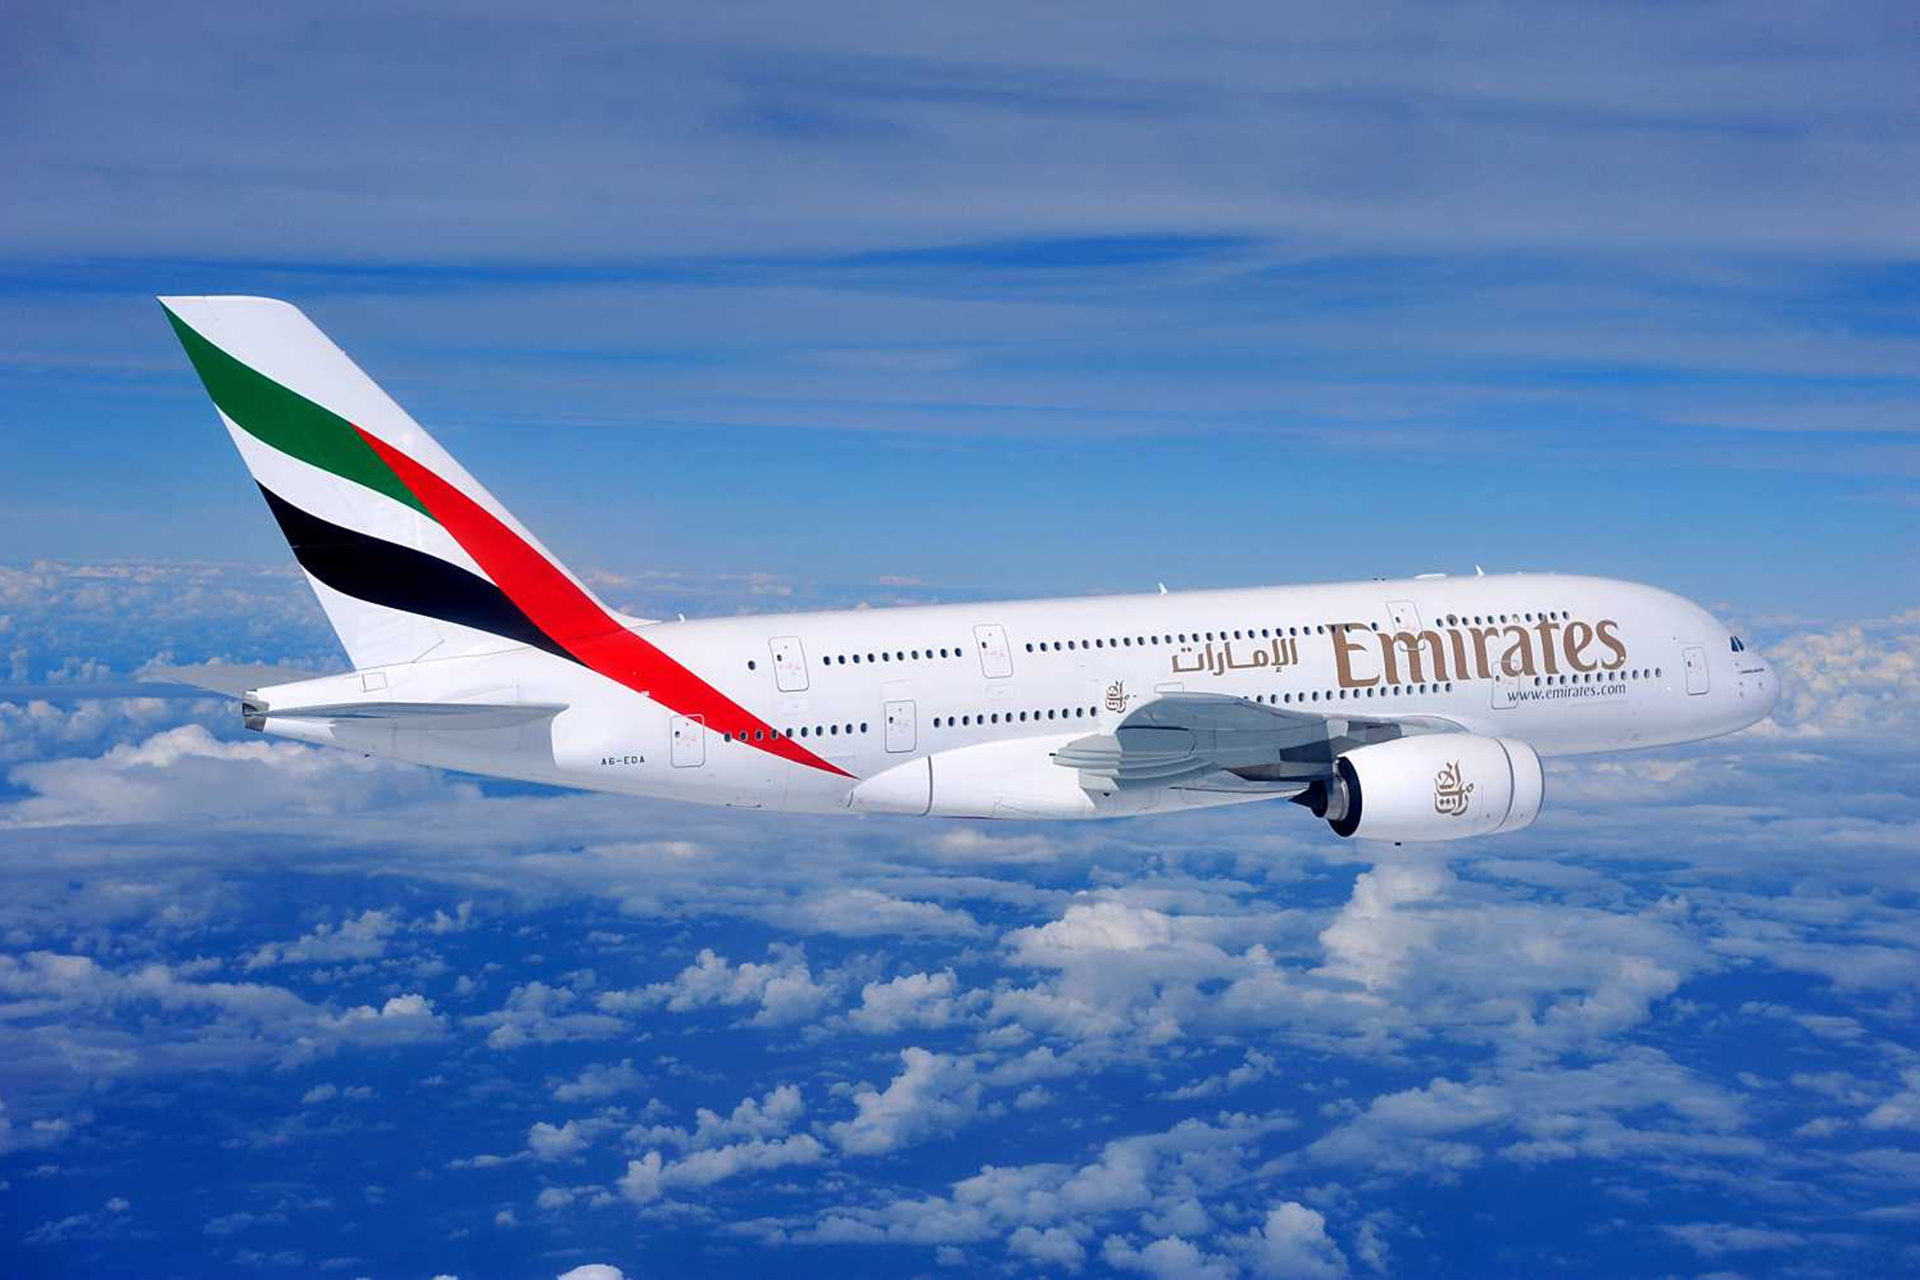 Авиарейсы в дубай. Авиакомпания Дубай Эмирейтс. Fly Emirates a380. Airbus a380 шейха. Самолет Дубай Эмирейтс.